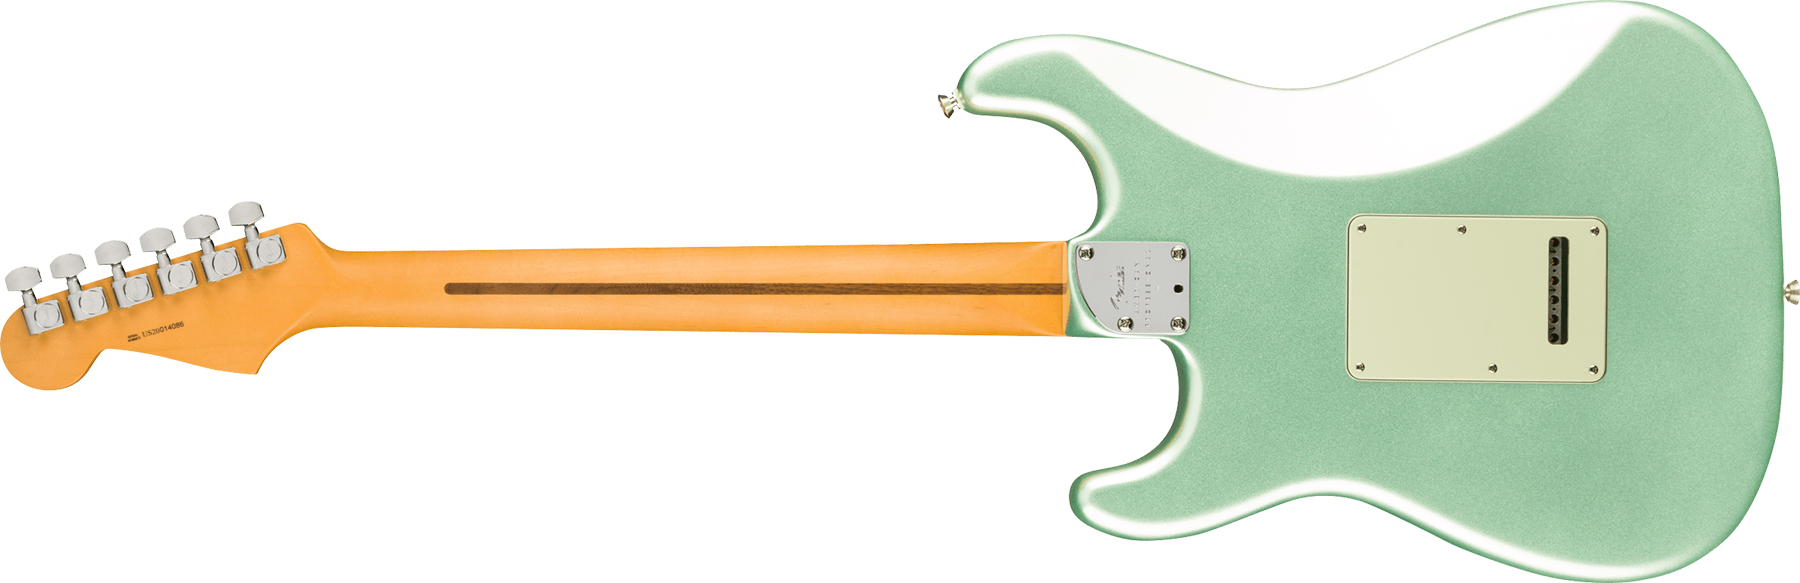 Fender Strat American Professional Ii Usa Mn - Mystic Surf Green - E-Gitarre in Str-Form - Variation 1